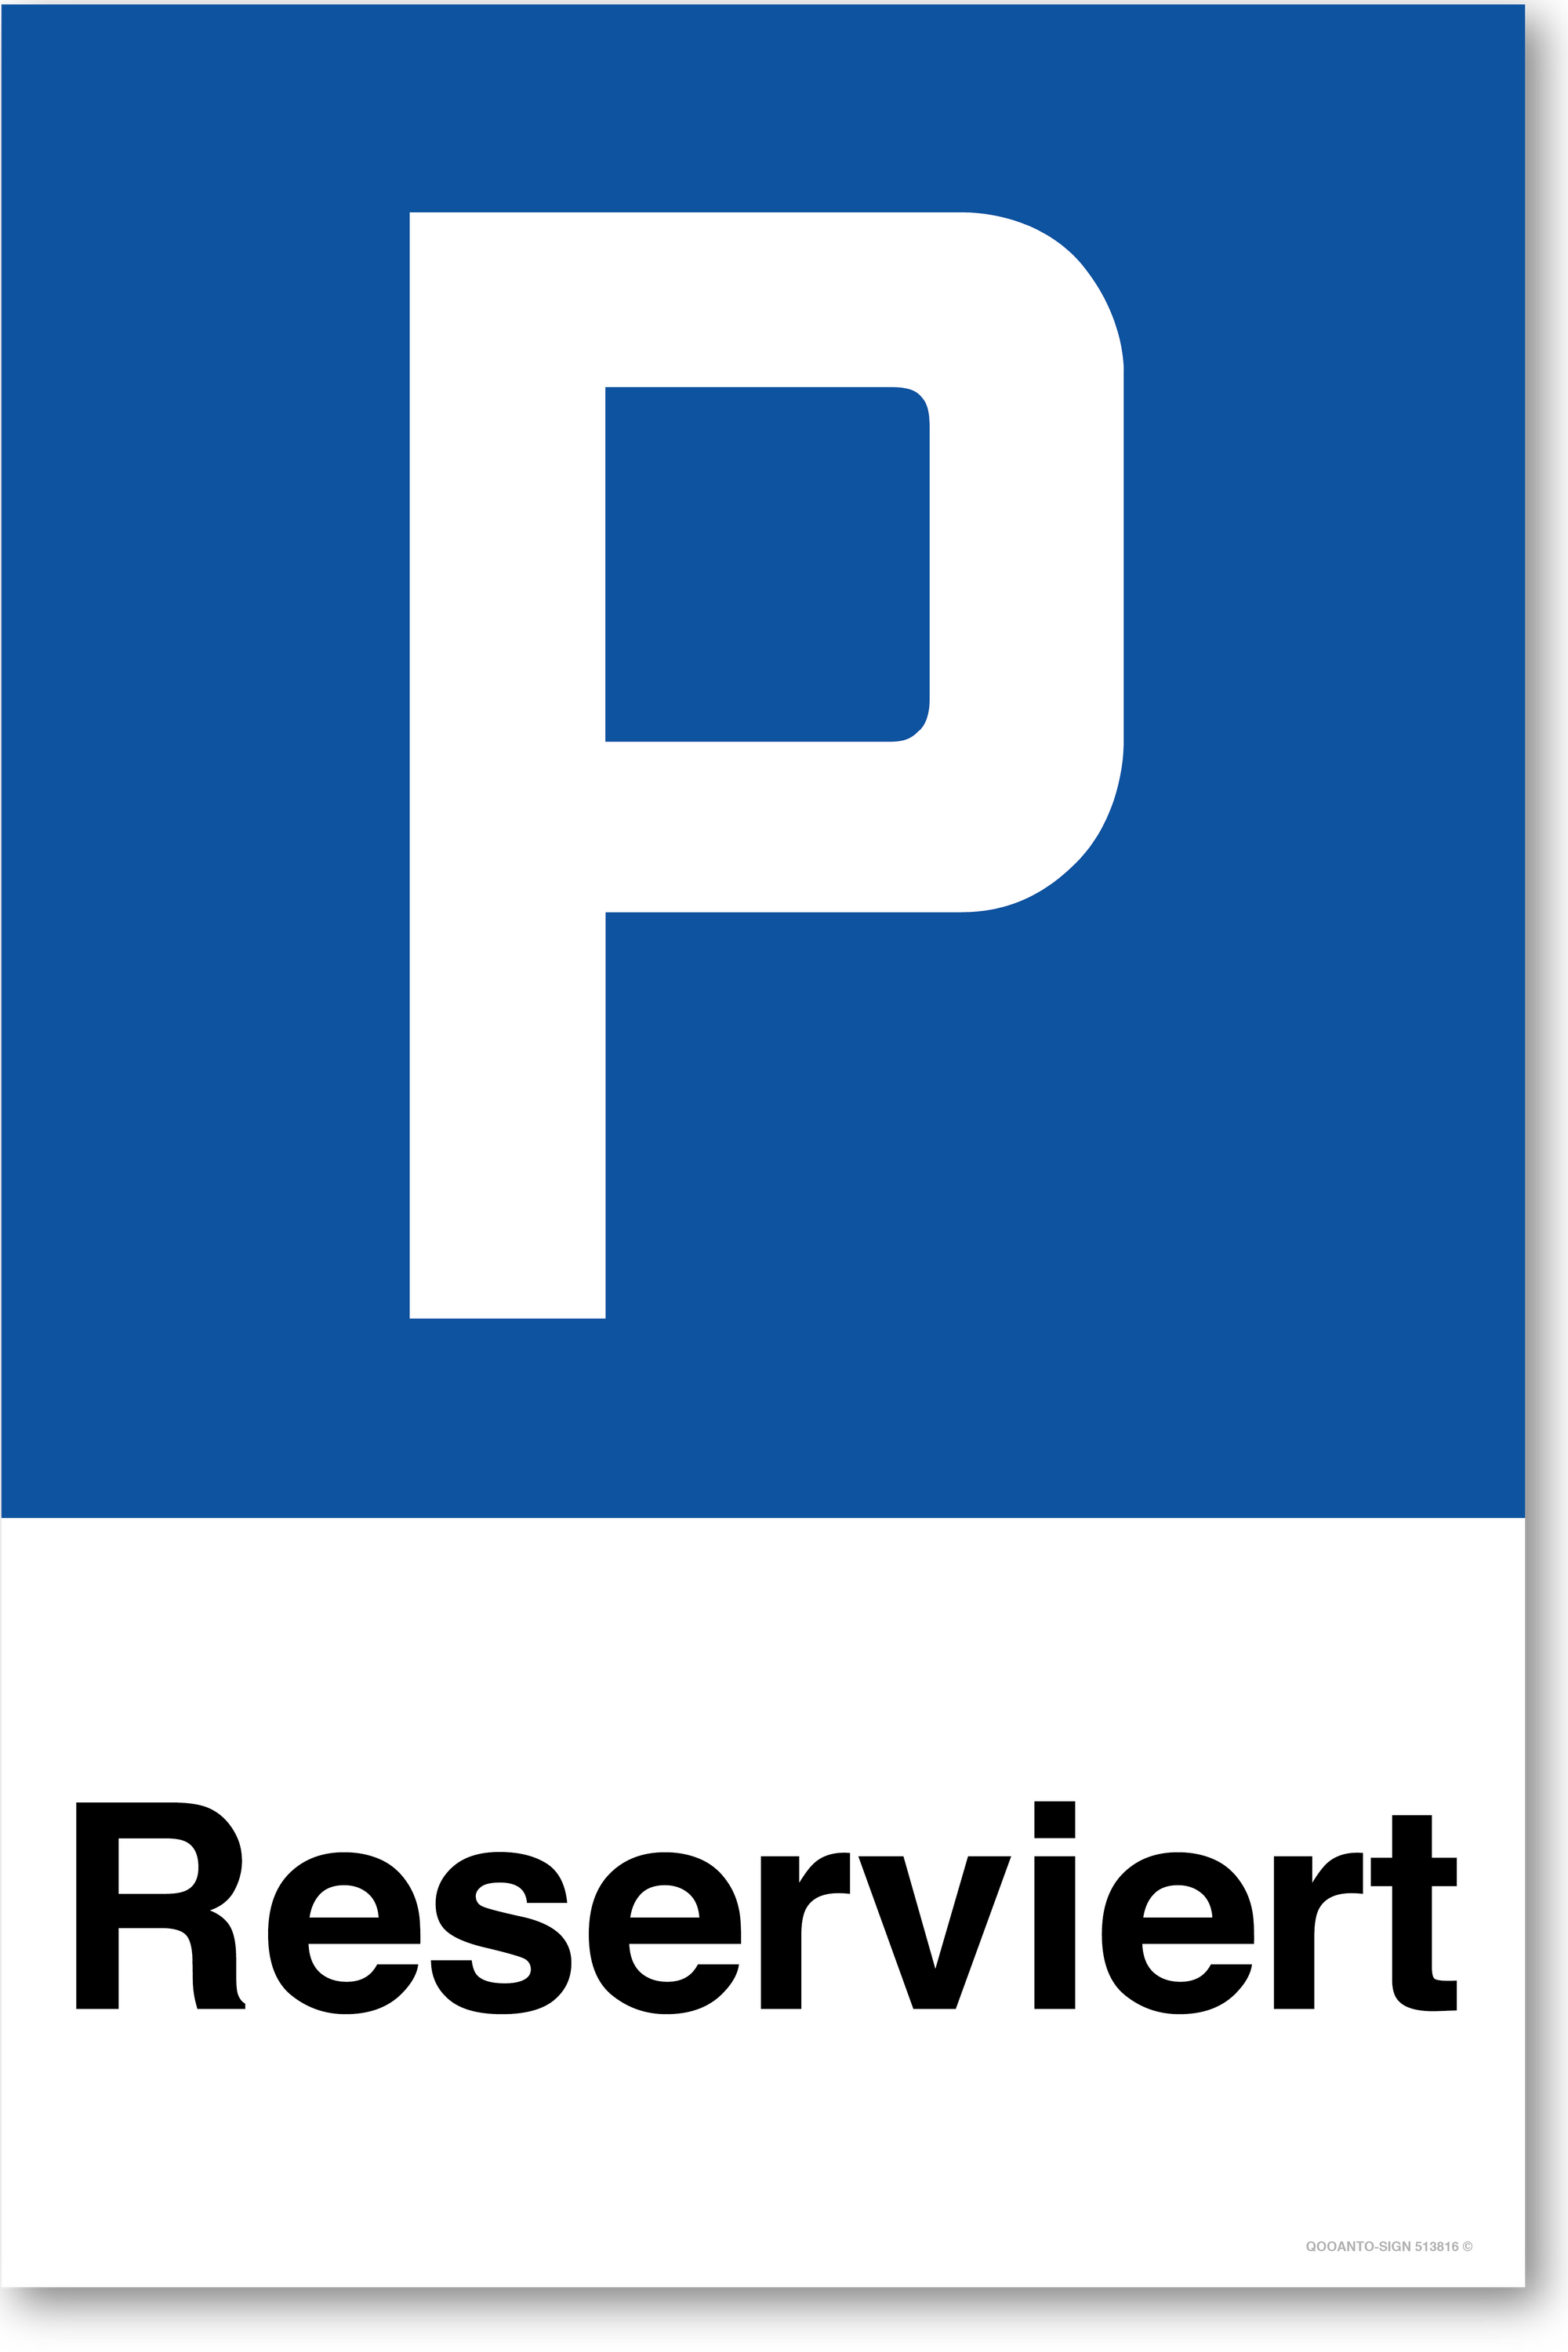 Reserviert - Parkplatzschild hochformat